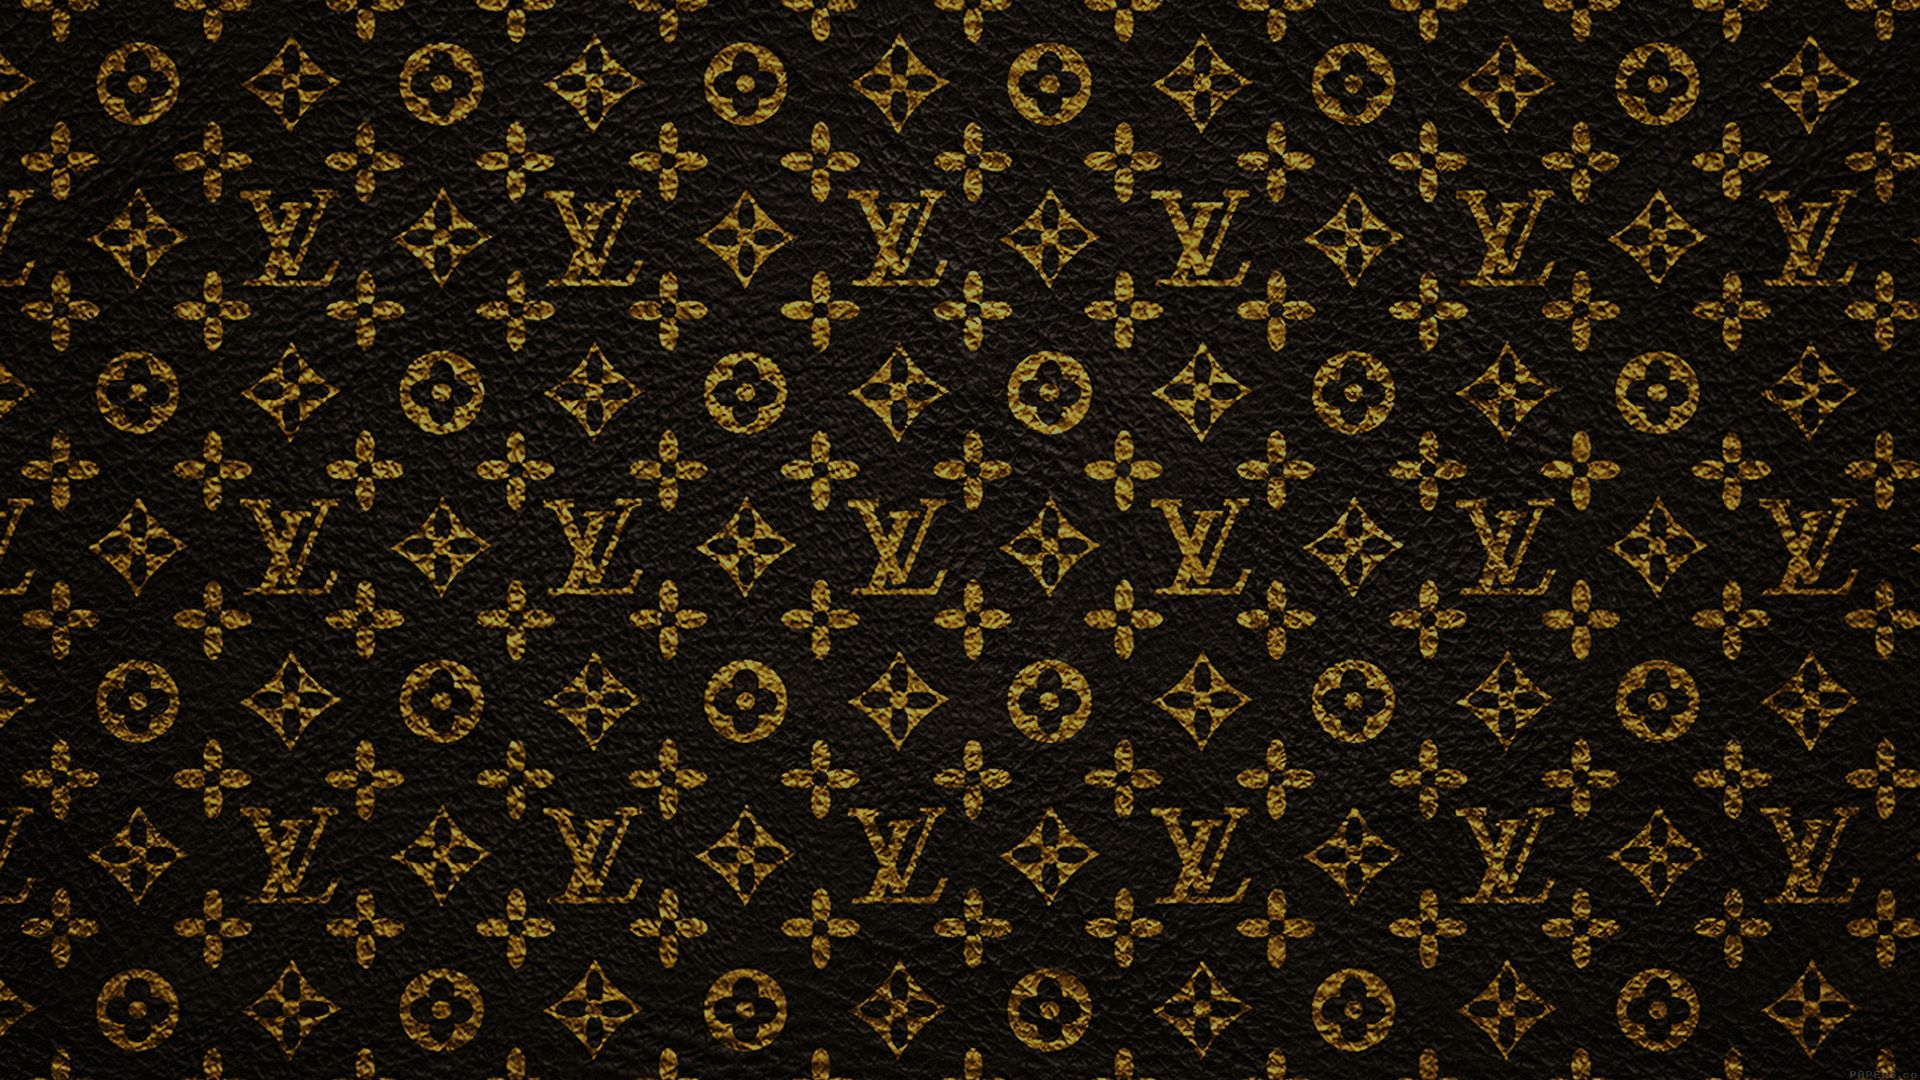 Louis Vuitton Wallpaper Background. The Art of Mike Mignola